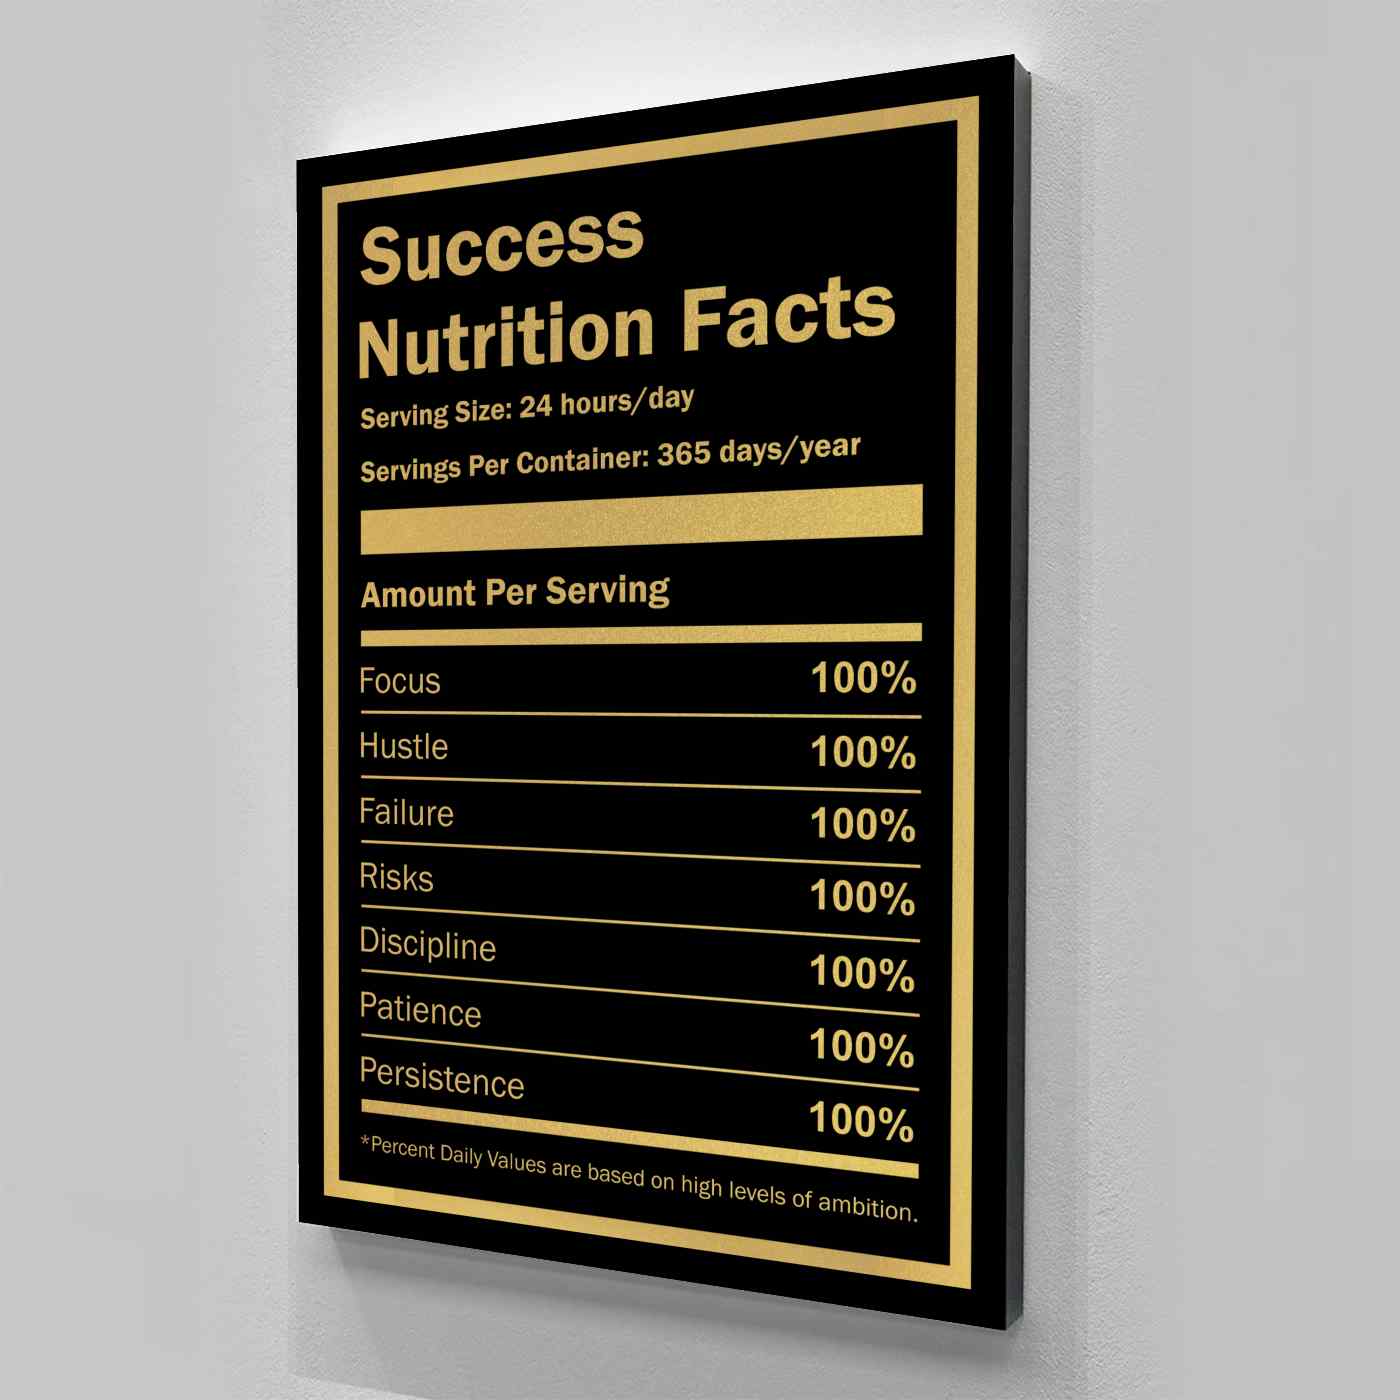 SUCCESS NUTRITION FACTS